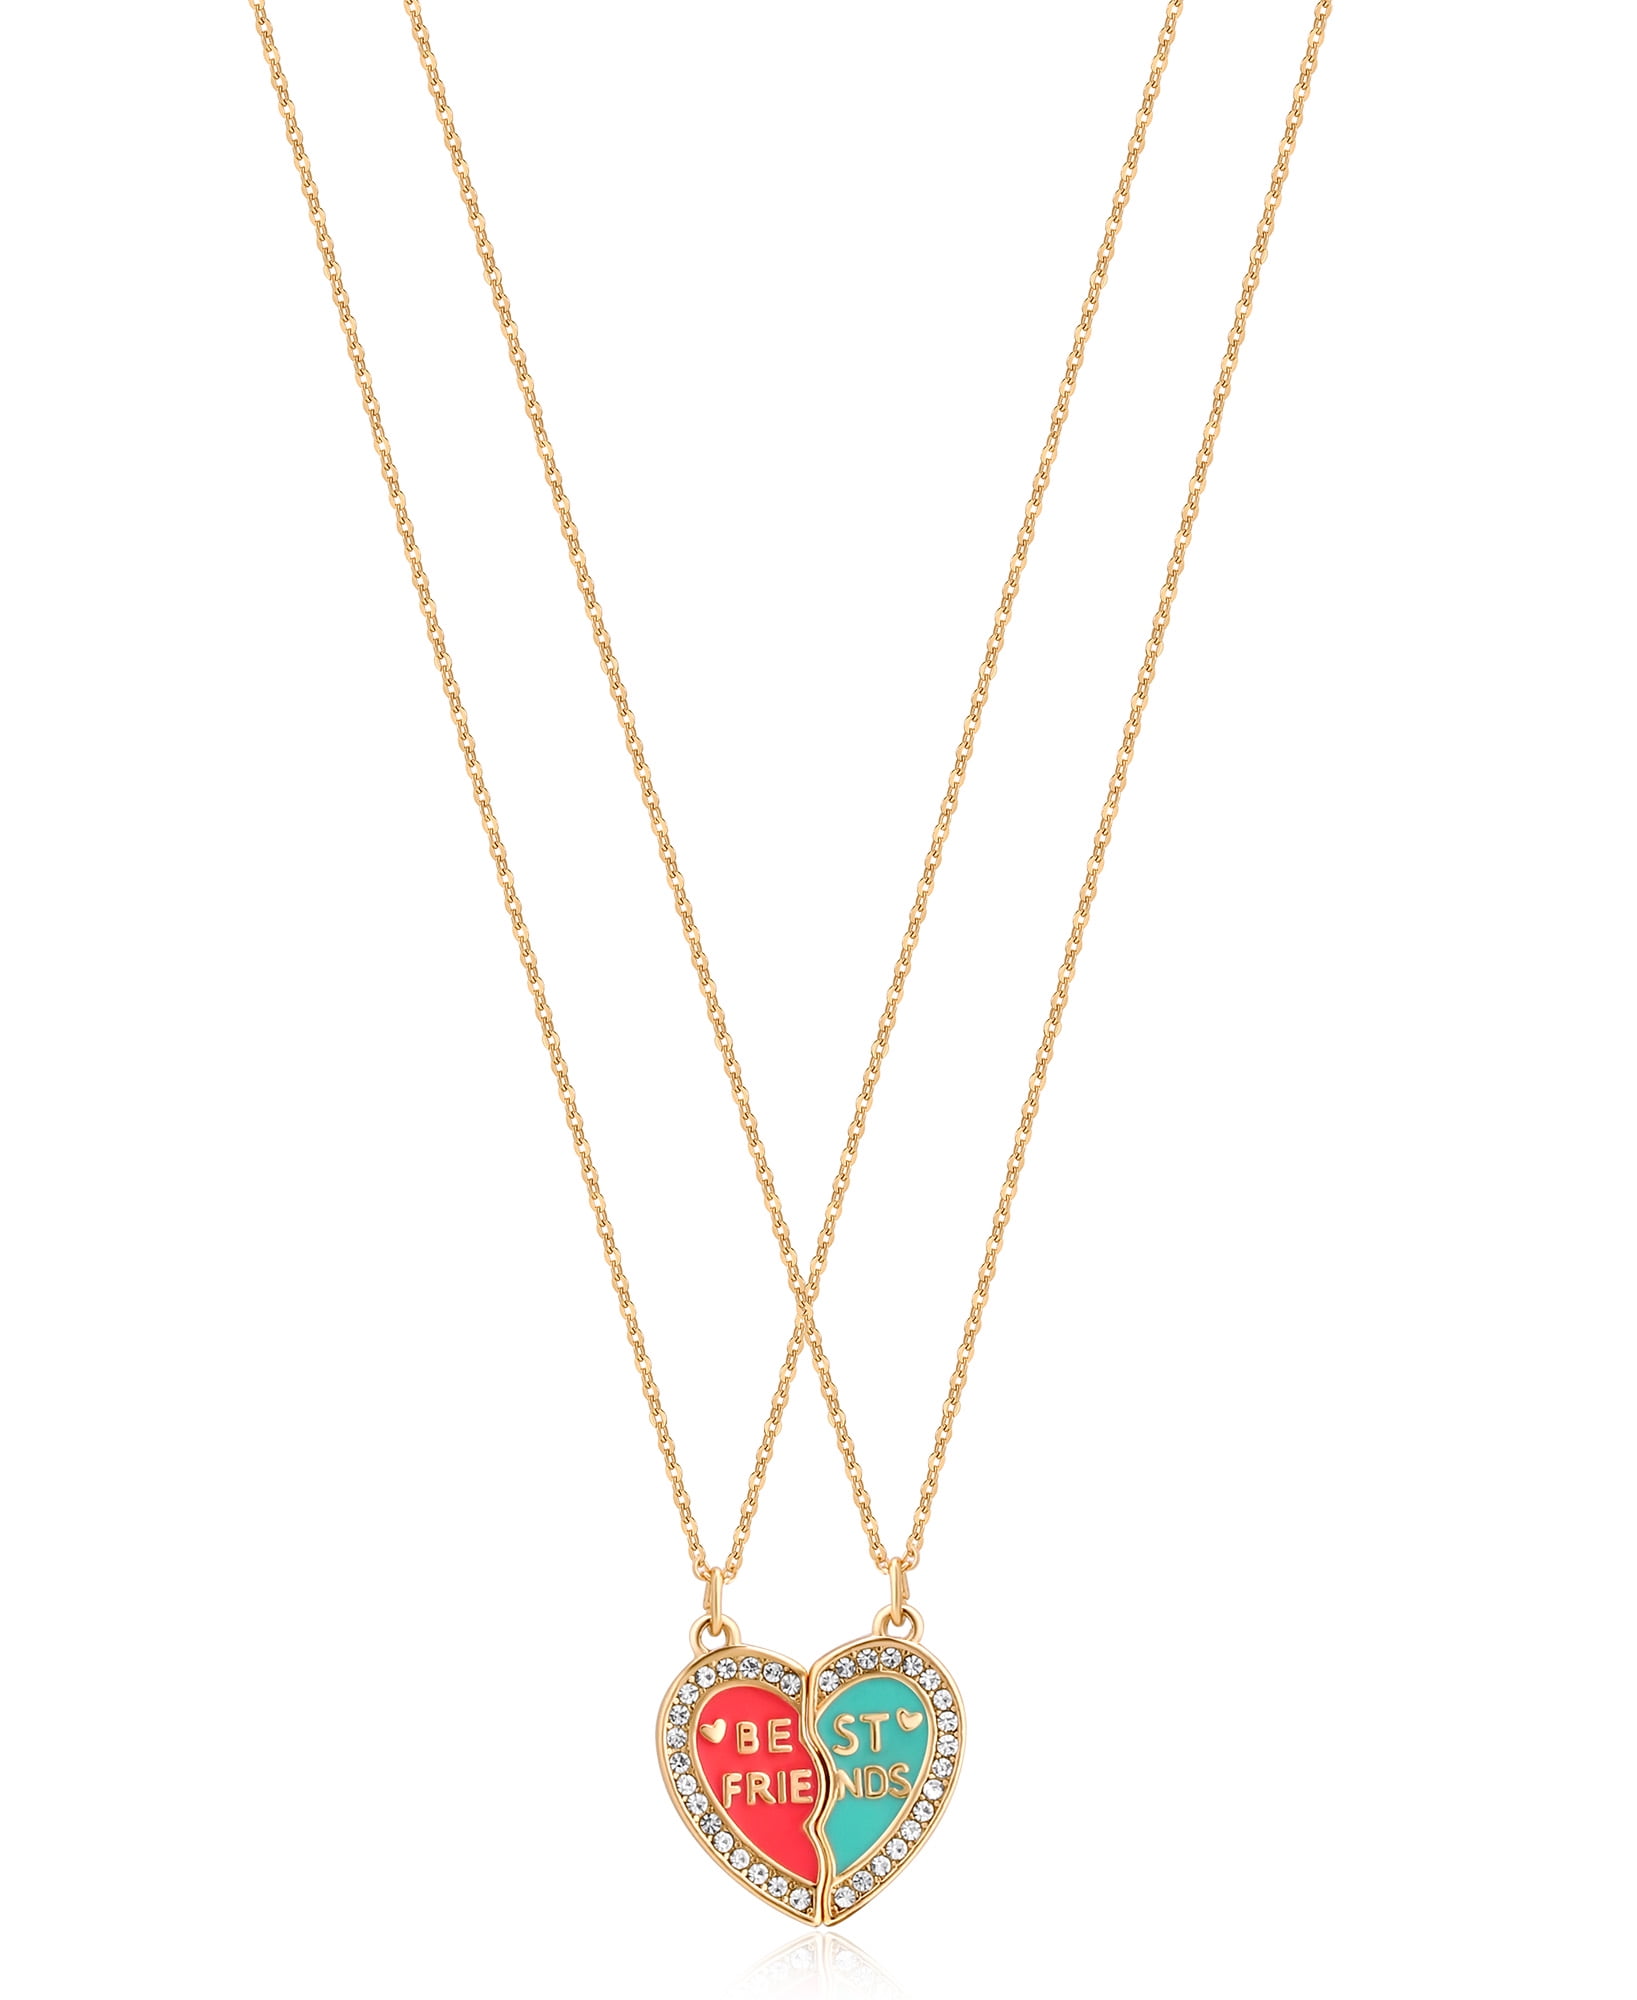 Magnetic Necklace 2 Pcs / Set Heart Shaped Best Friends Gift Couples E2K2  FAST | eBay